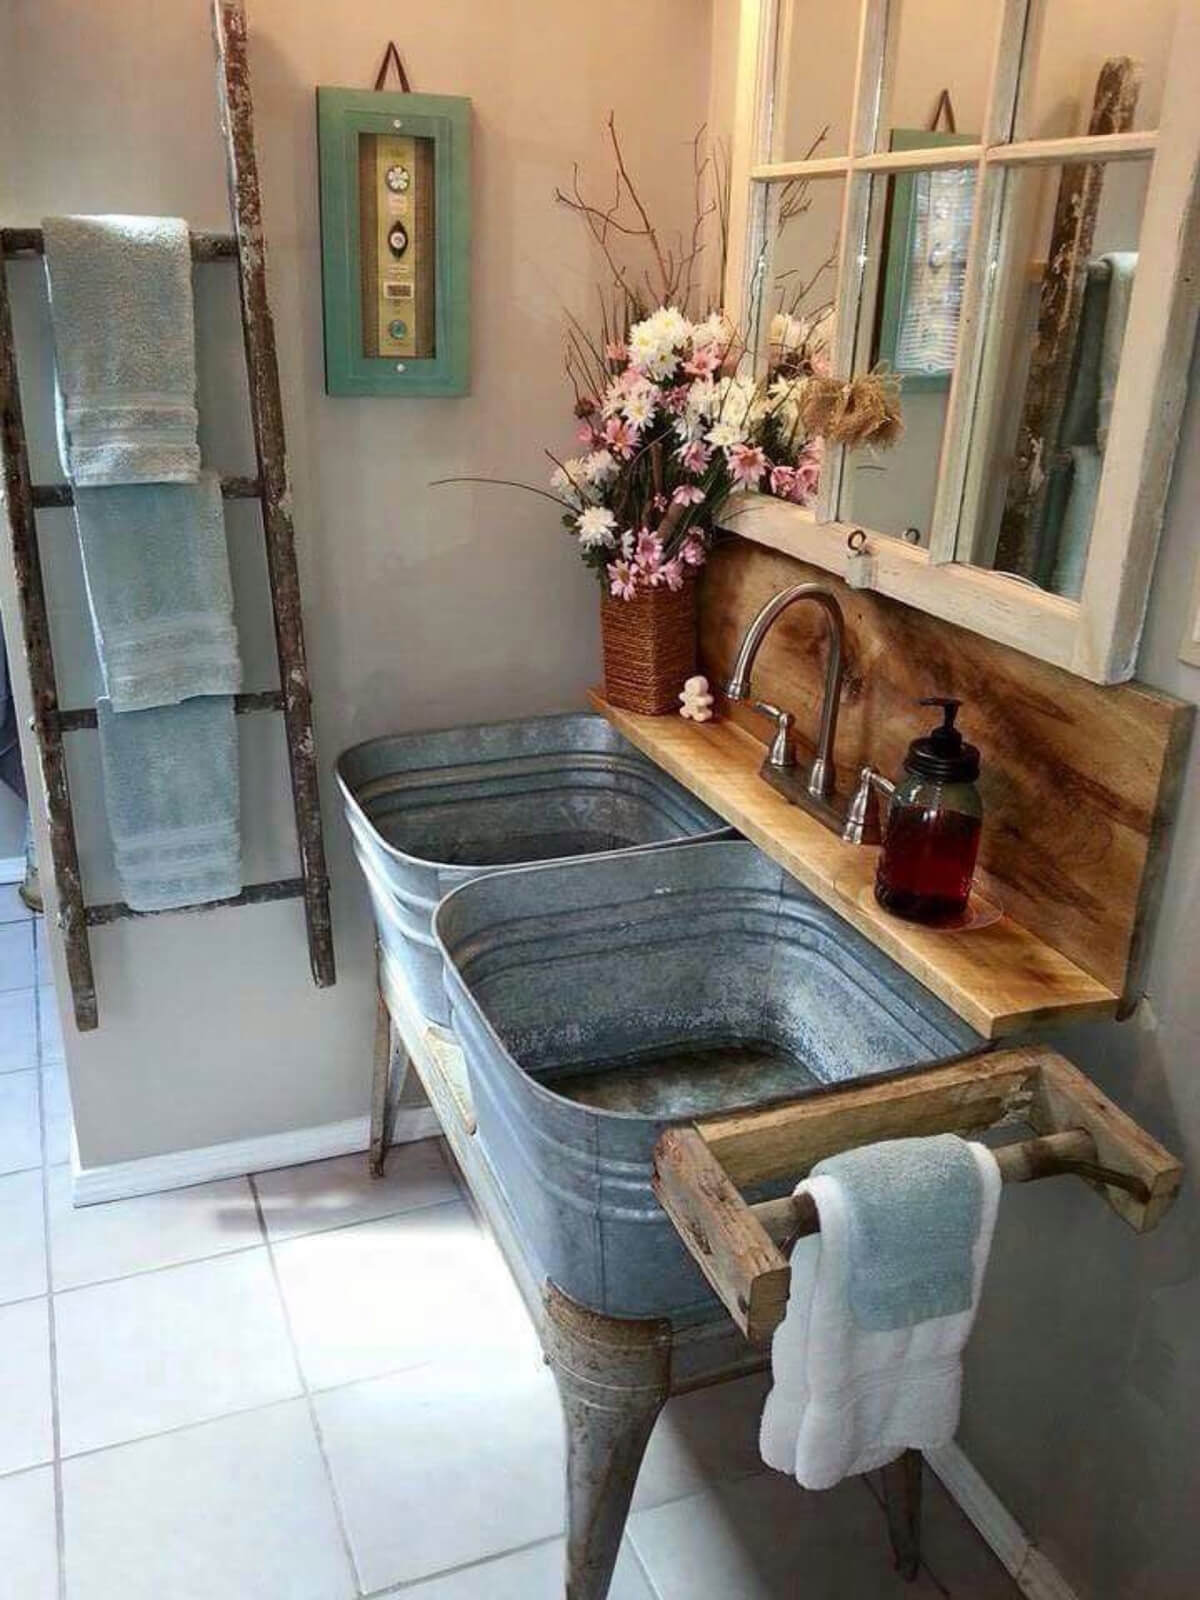 Rustic Barn-Inspired Sinks and Backsplash